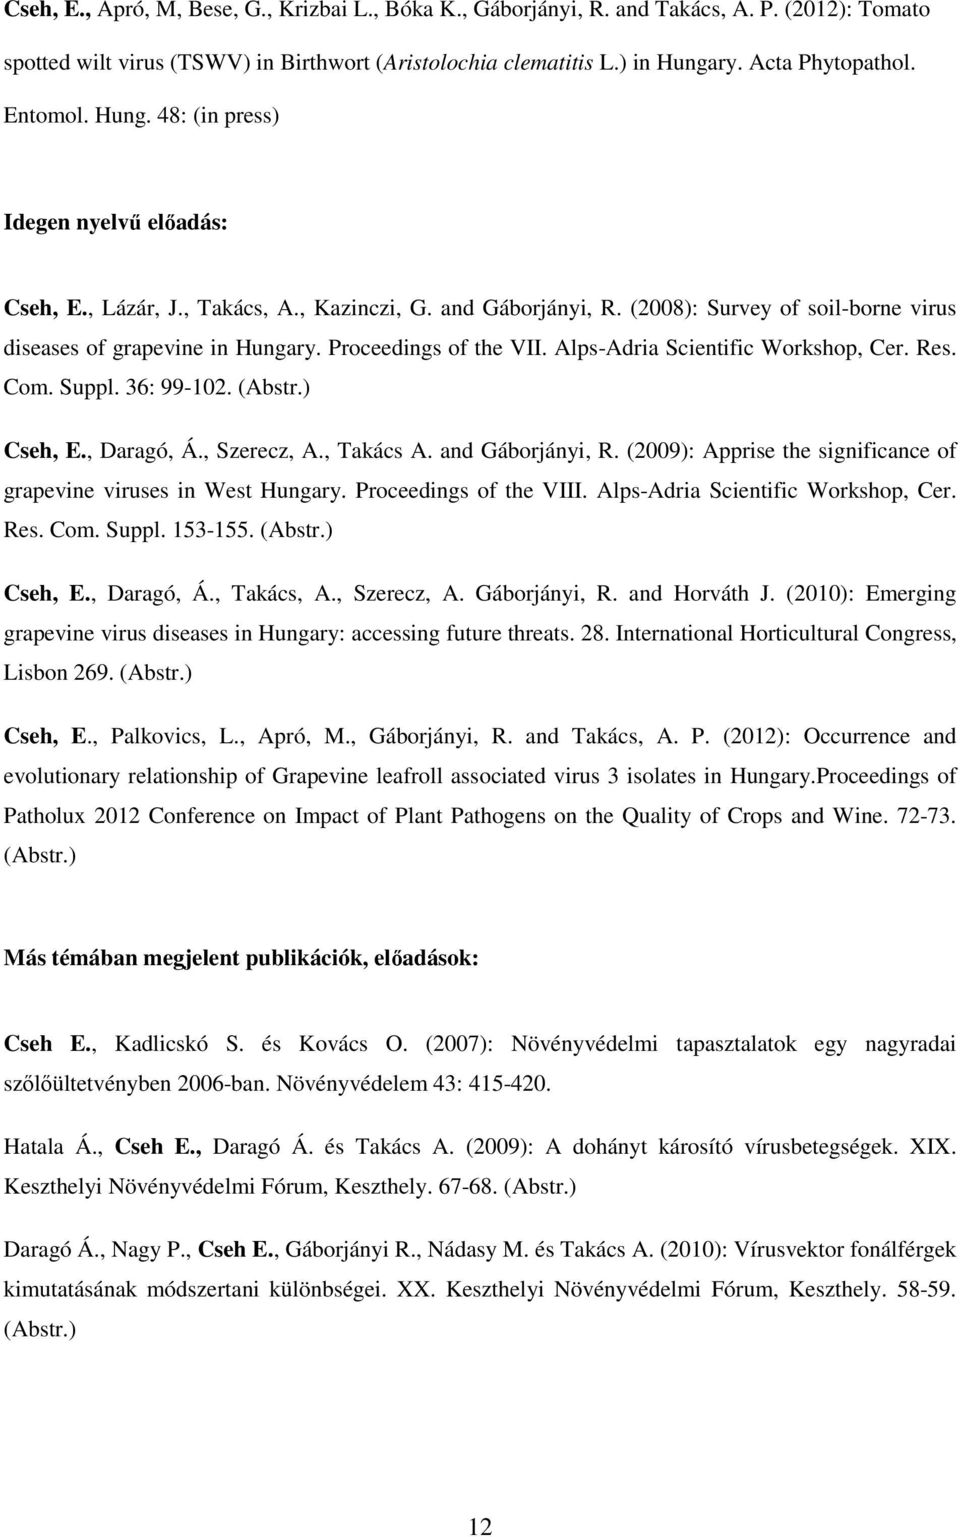 Proceedings of the VII. Alps-Adria Scientific Workshop, Cer. Res. Com. Suppl. 36: 99-102. (Abstr.) Cseh, E., Daragó, Á., Szerecz, A., Takács A. and Gáborjányi, R.